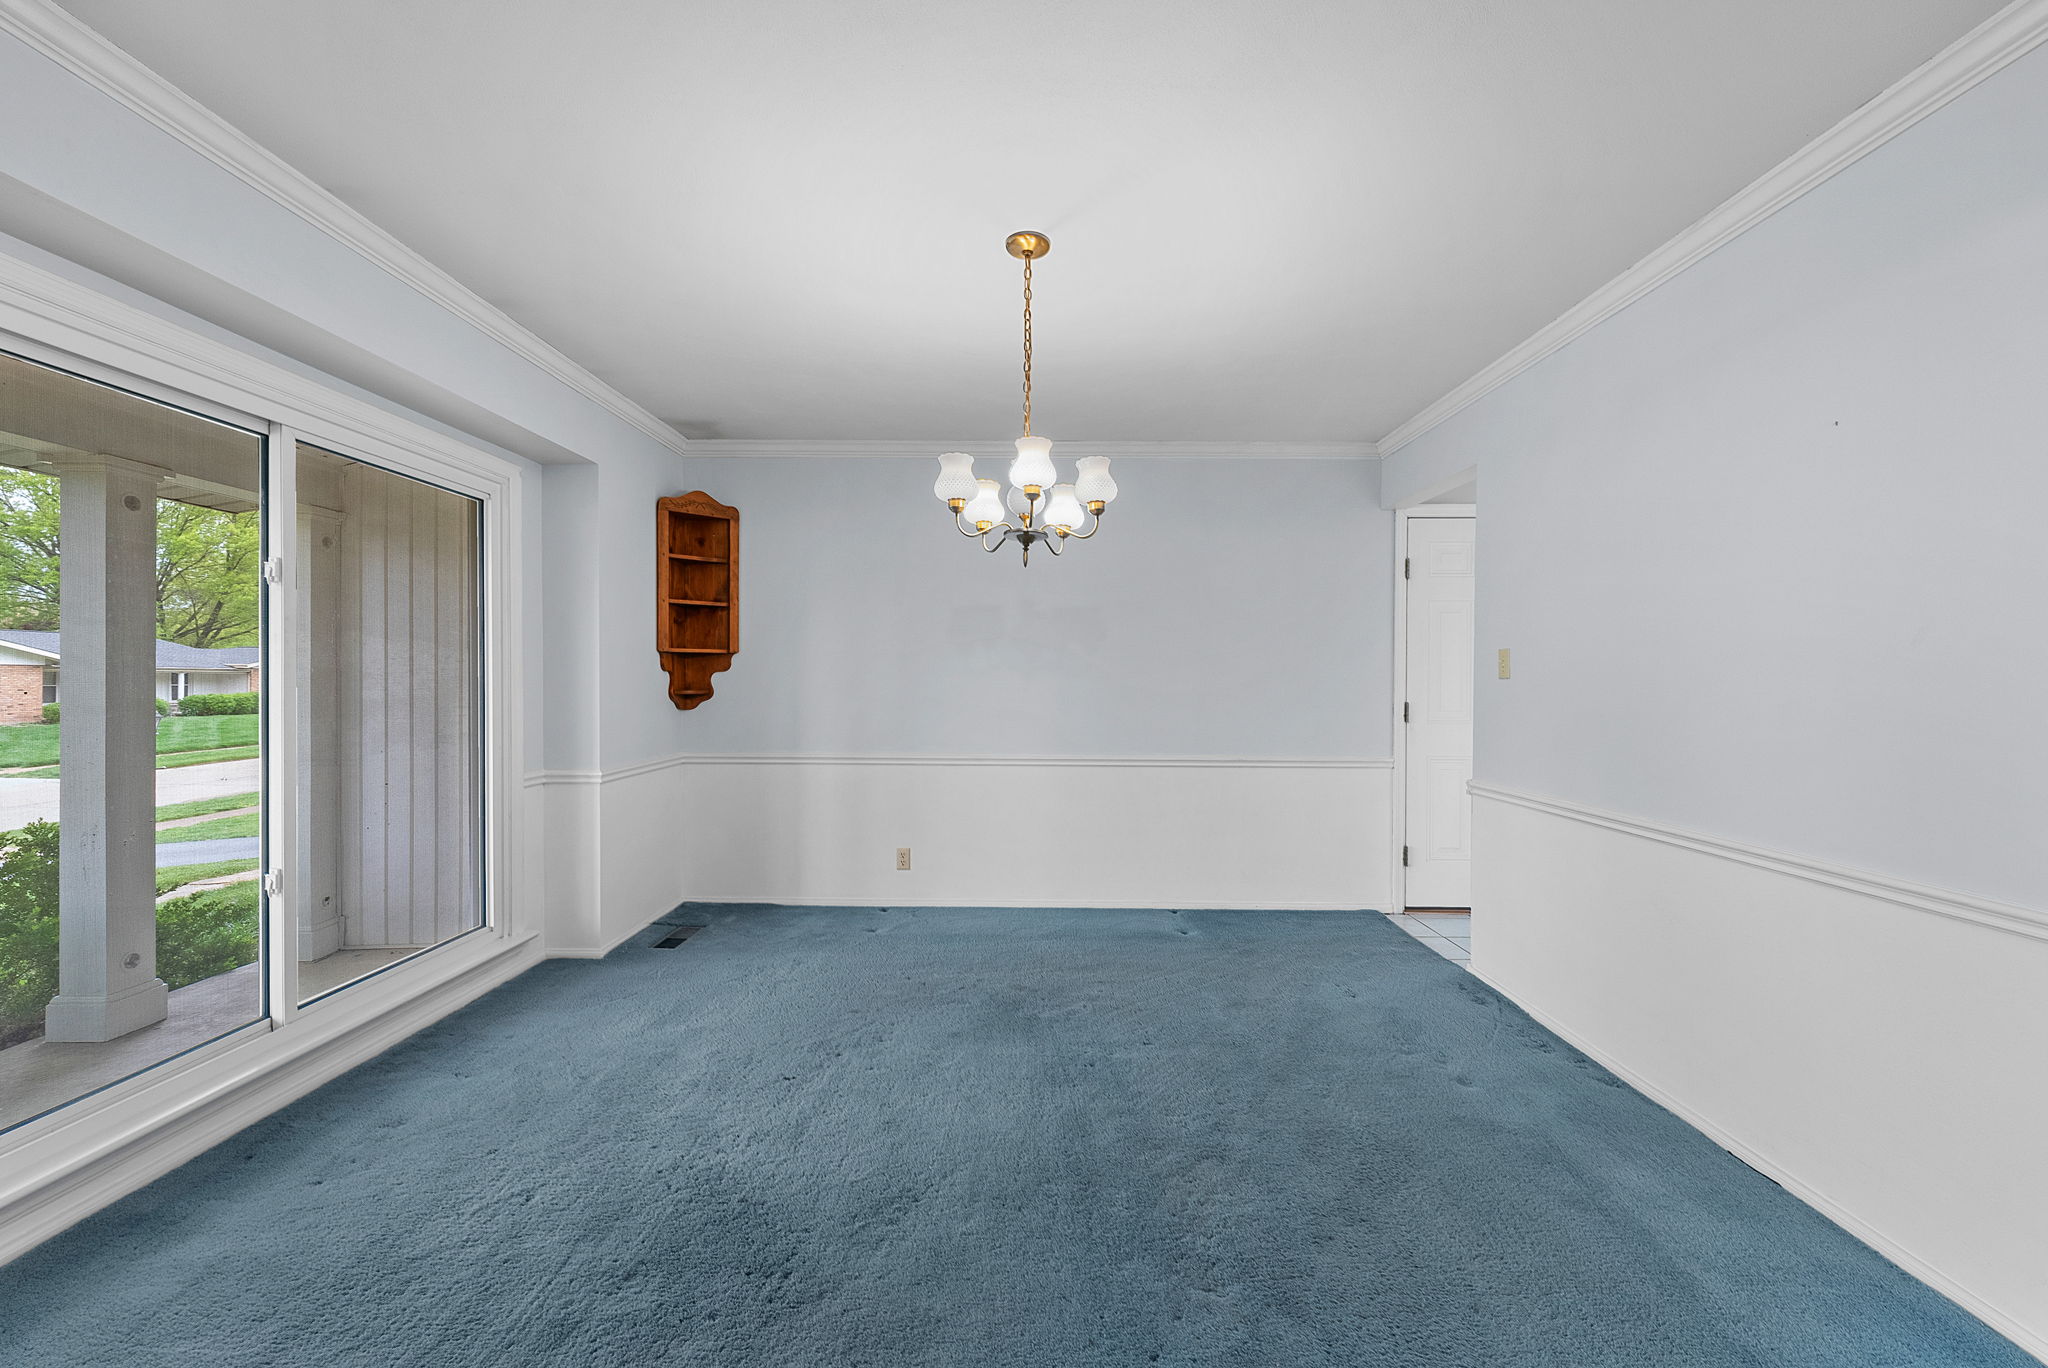 The formal dining room also boasts original hardwood floors beneath the carpet.